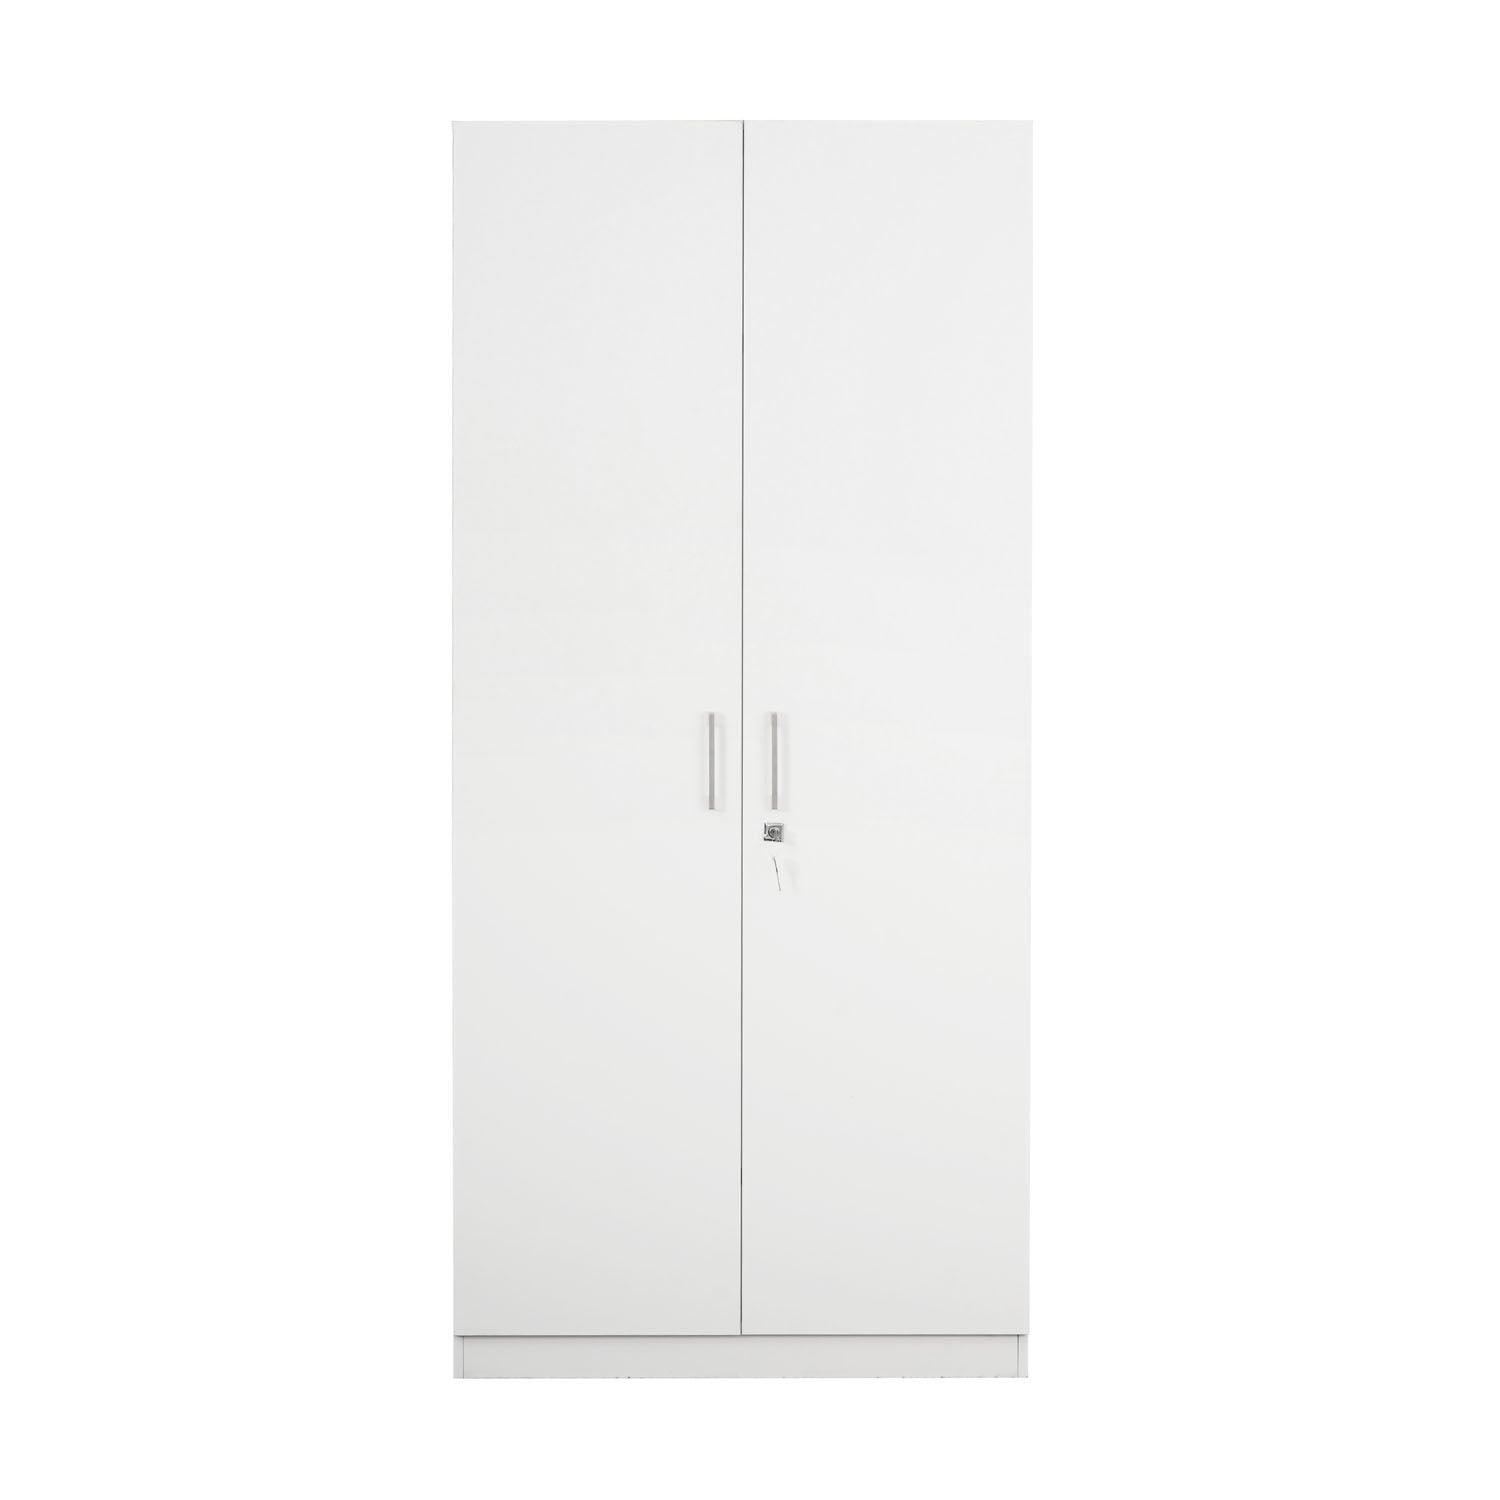 Max 2 Door Wardrobe (Frosty White)